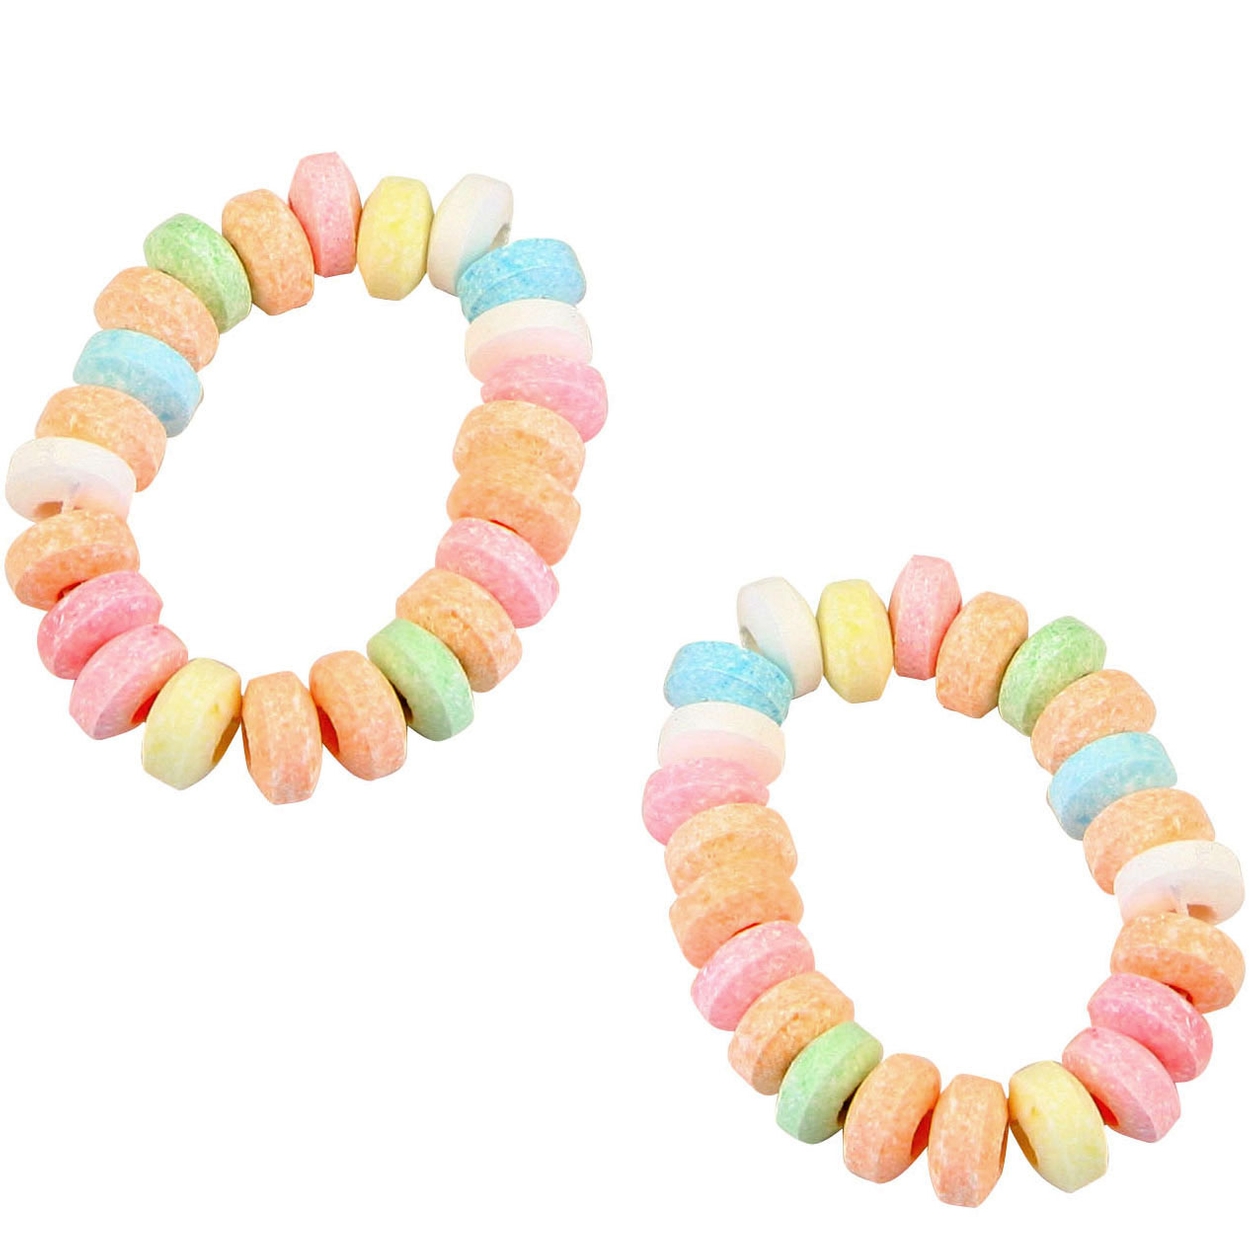 Candy Bracelets - 30CT Bag